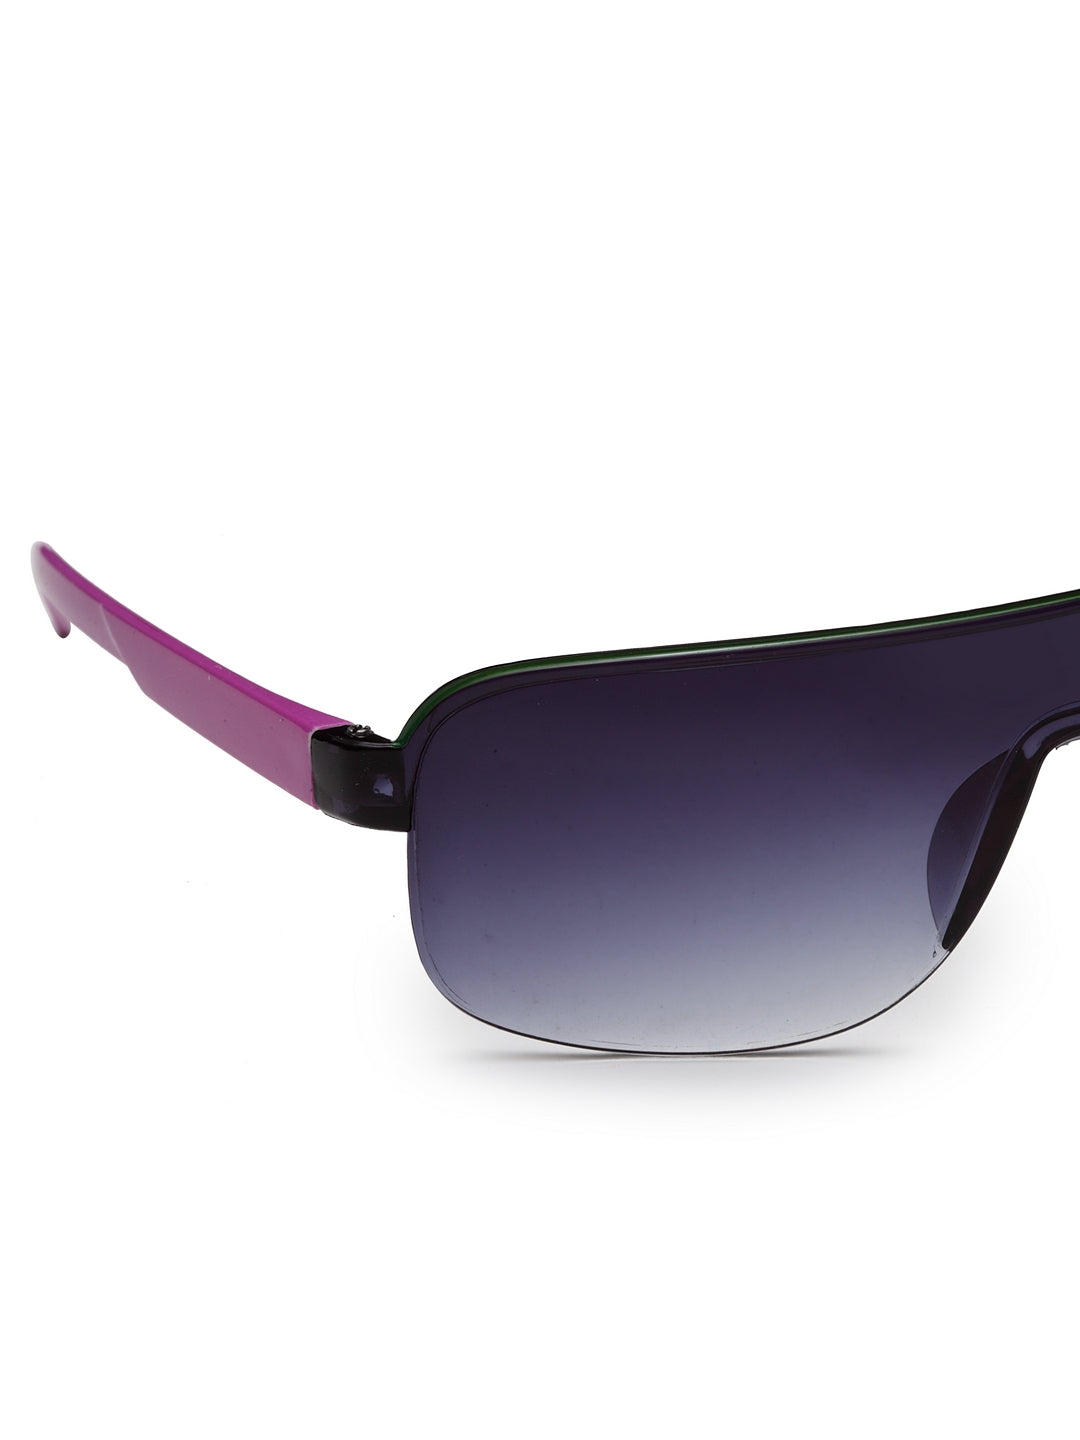 Stol'n Premium Attractive Fashionable UV-Protected Sports Shape Sunglasses - Purple